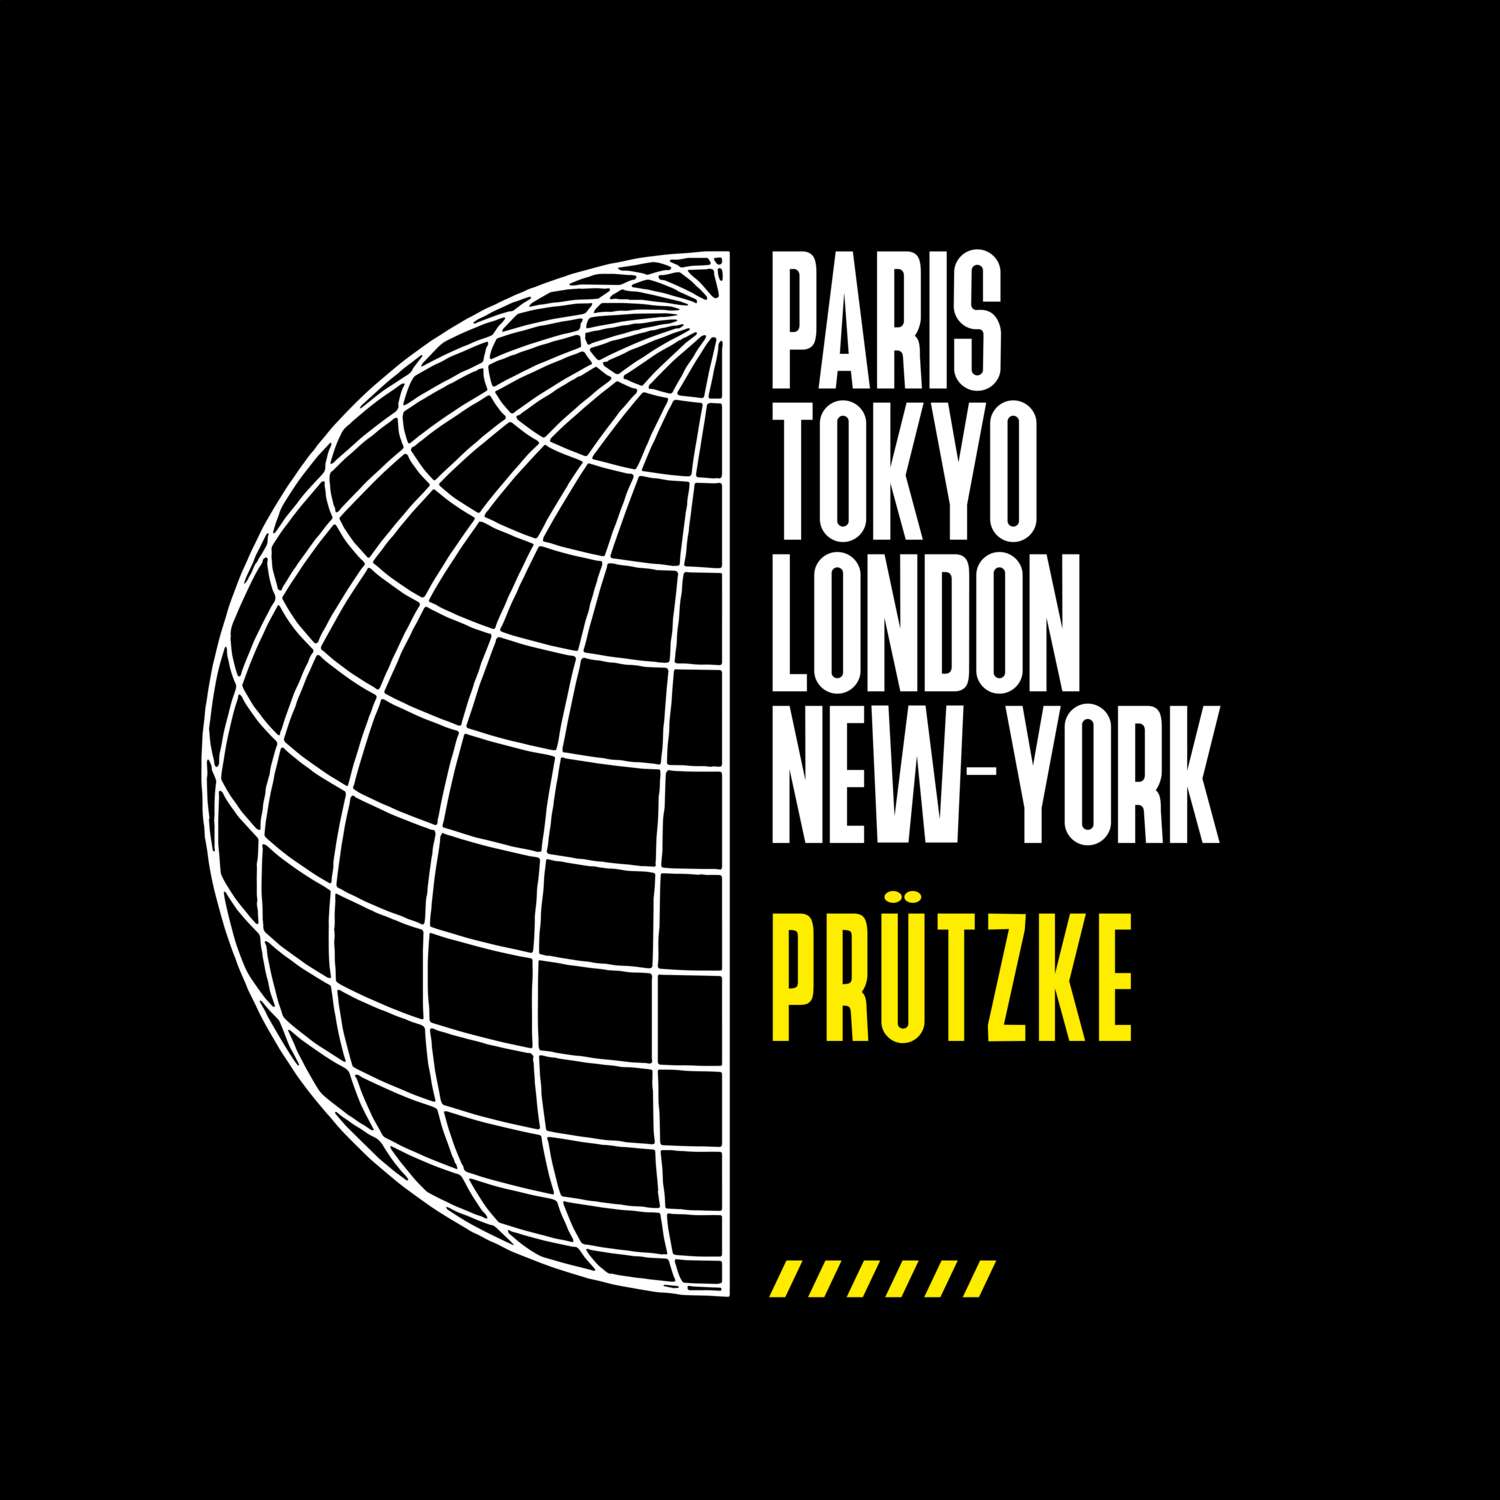 Prützke T-Shirt »Paris Tokyo London«